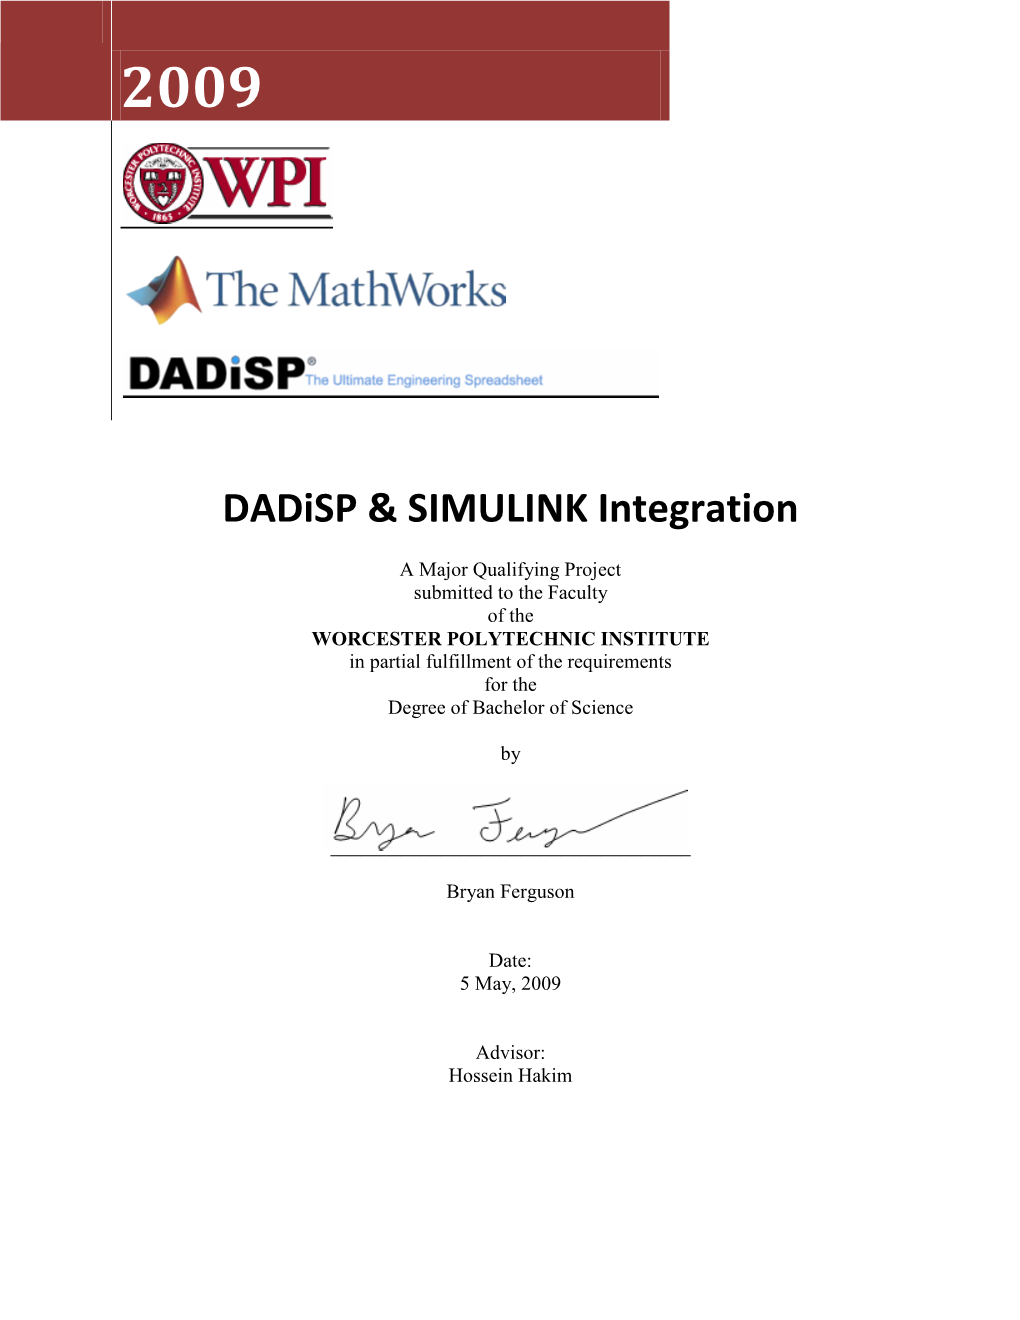 Dadisp & Simulink Integration